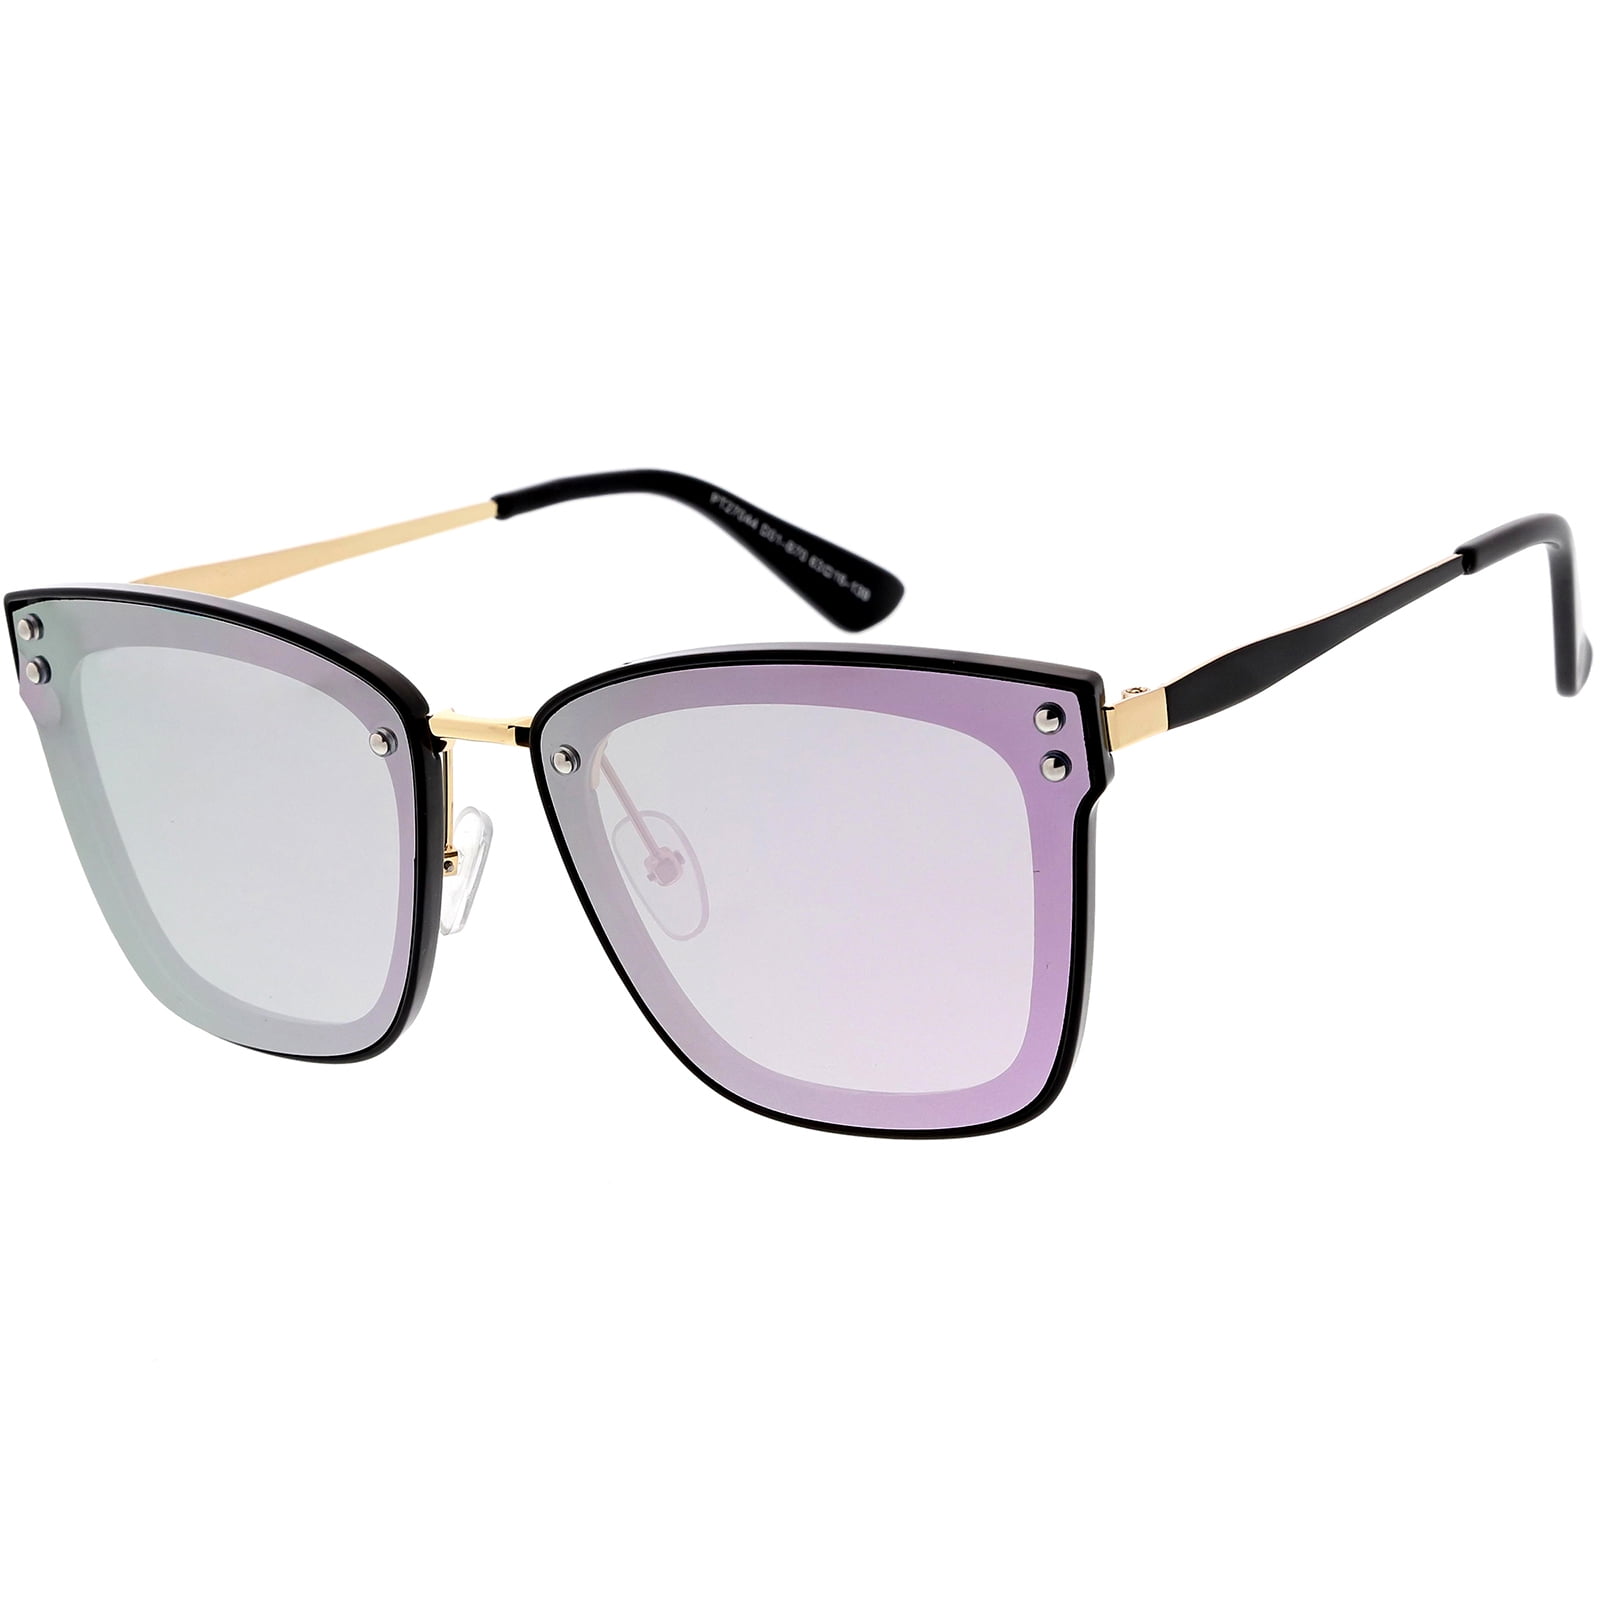 Big Square Sunglasses Oversized Man Woman Purple Frame Mirror 